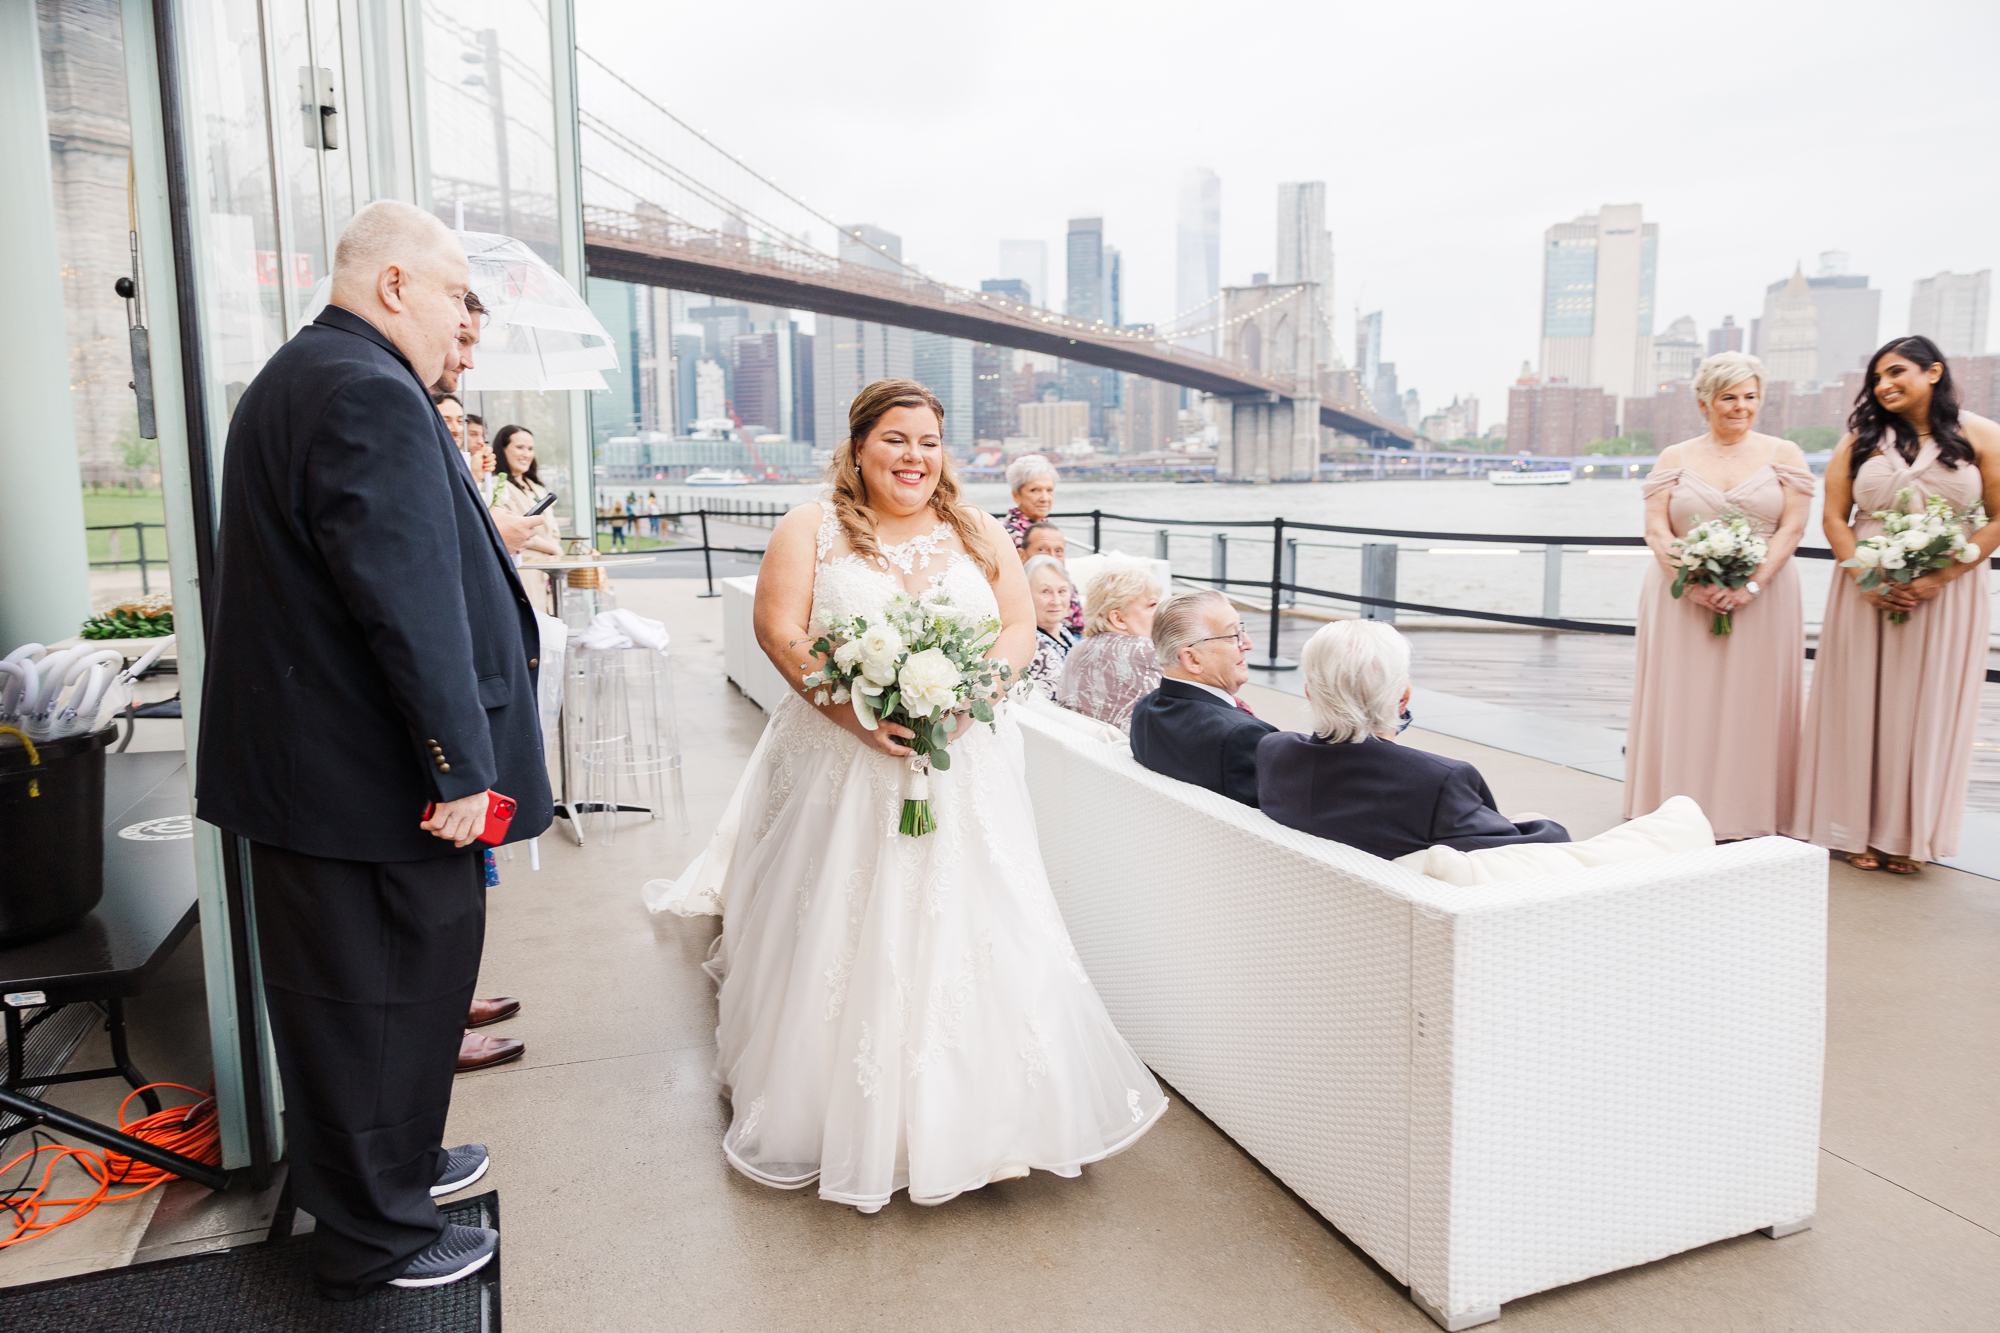 Vibrant Brooklyn Wedding at Jane's Carousel